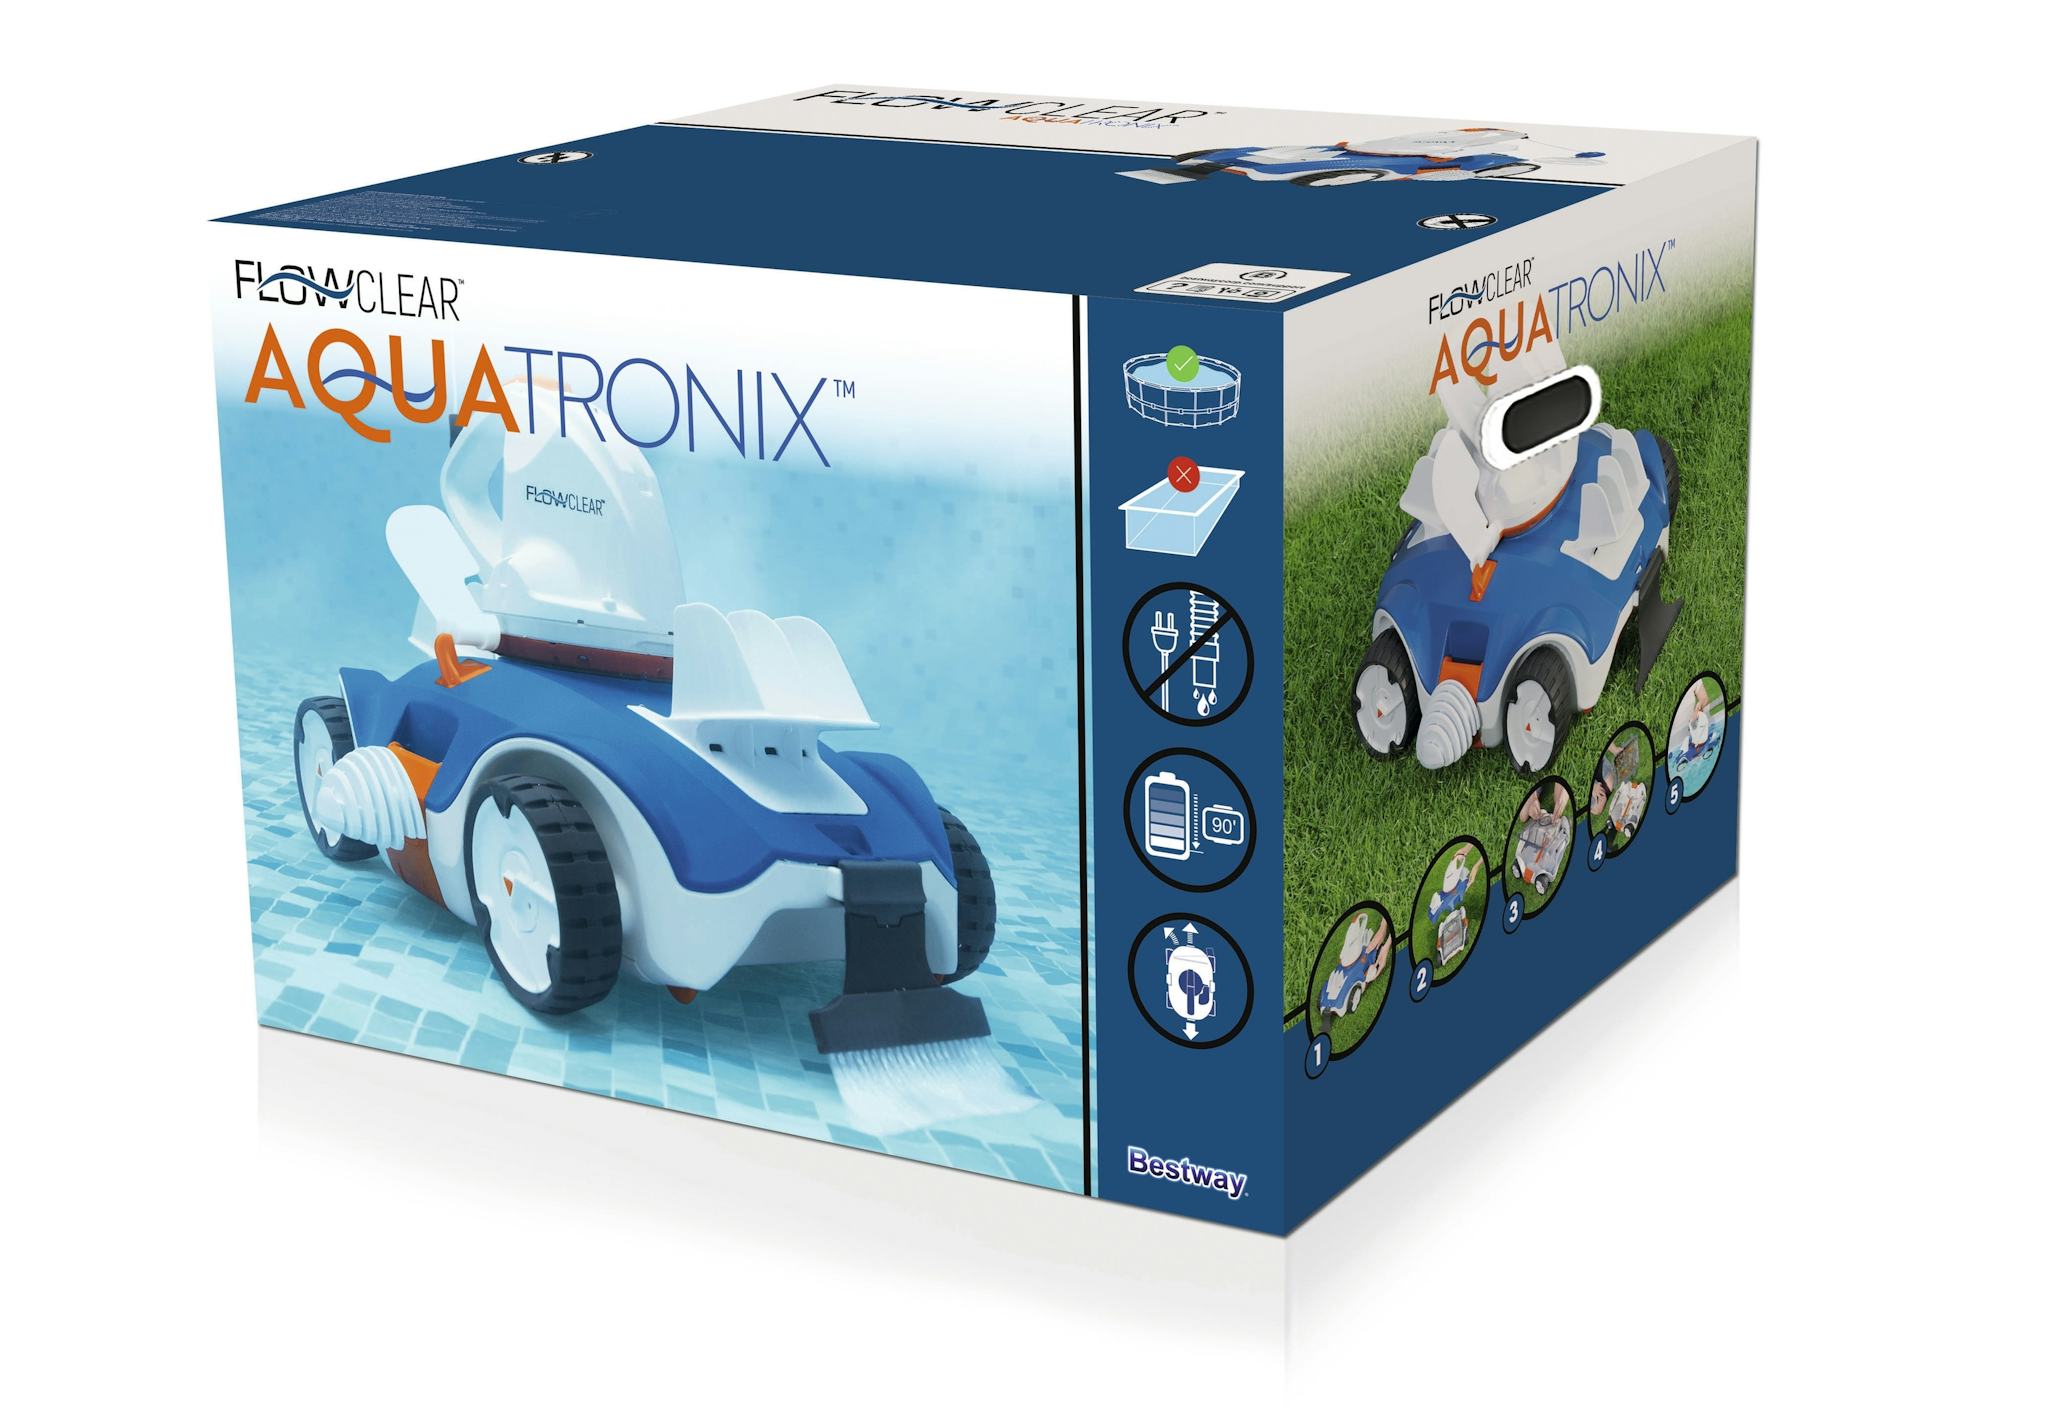 Accessori Piscine e Spa Robot per la pulizia della piscina Aquatronix Bestway 7